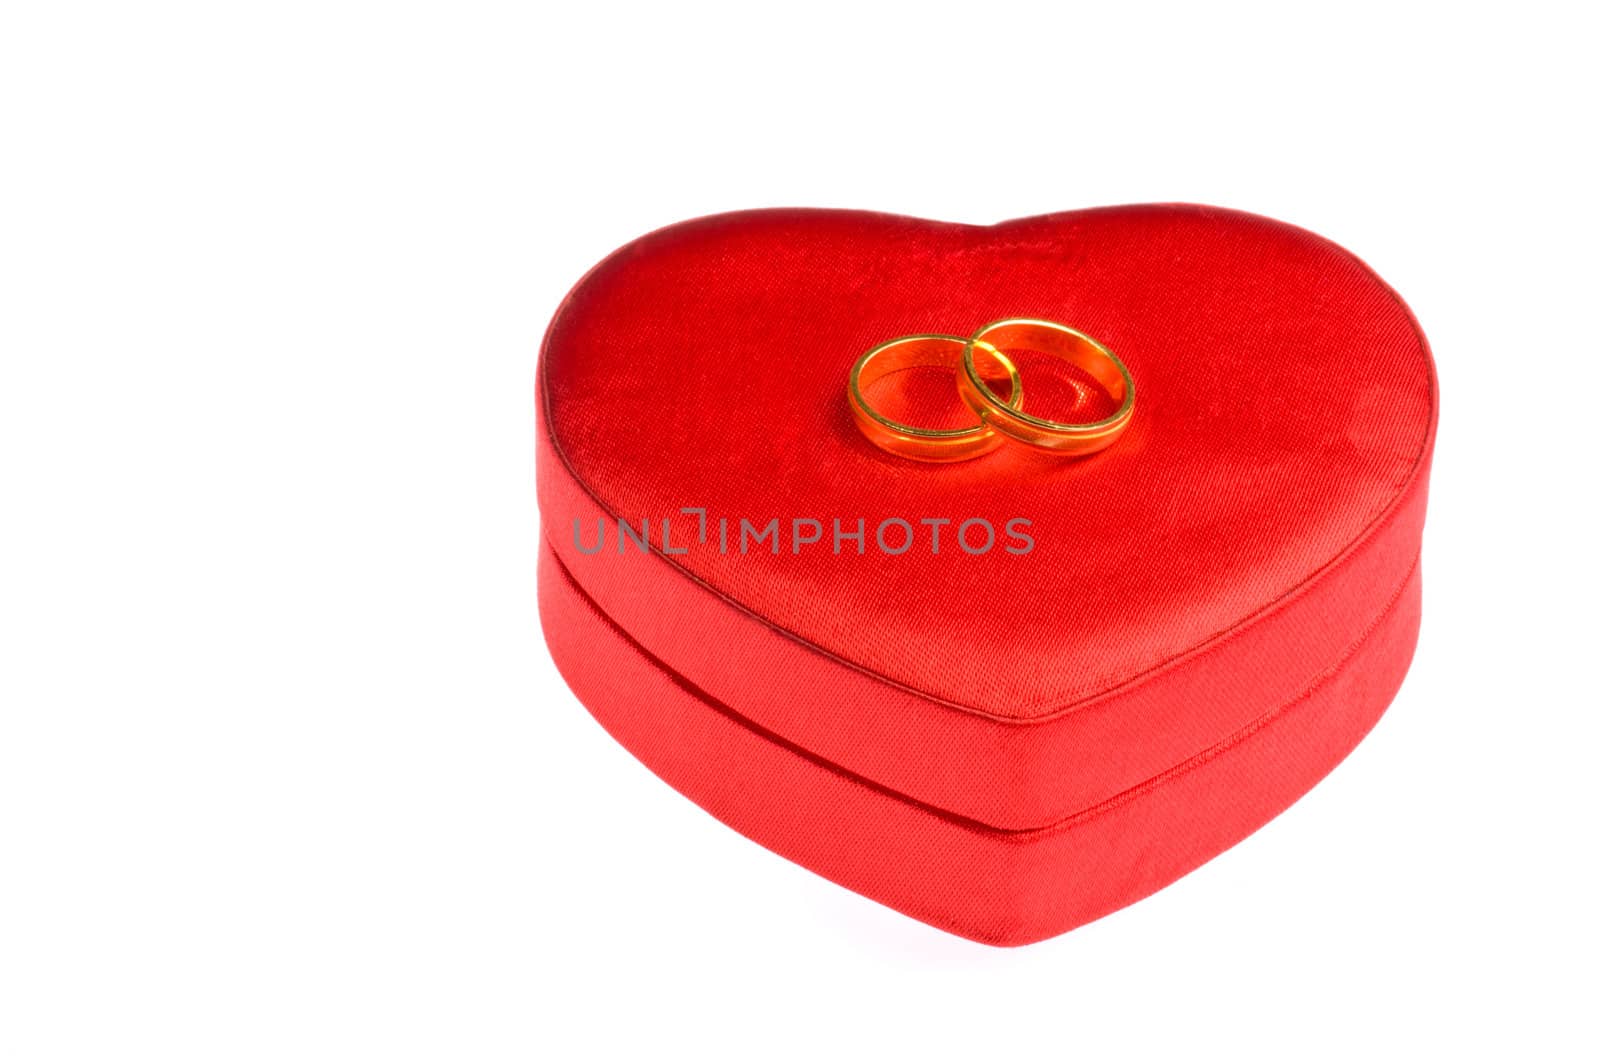 Wedding rings on a heart shape box by 3523Studio